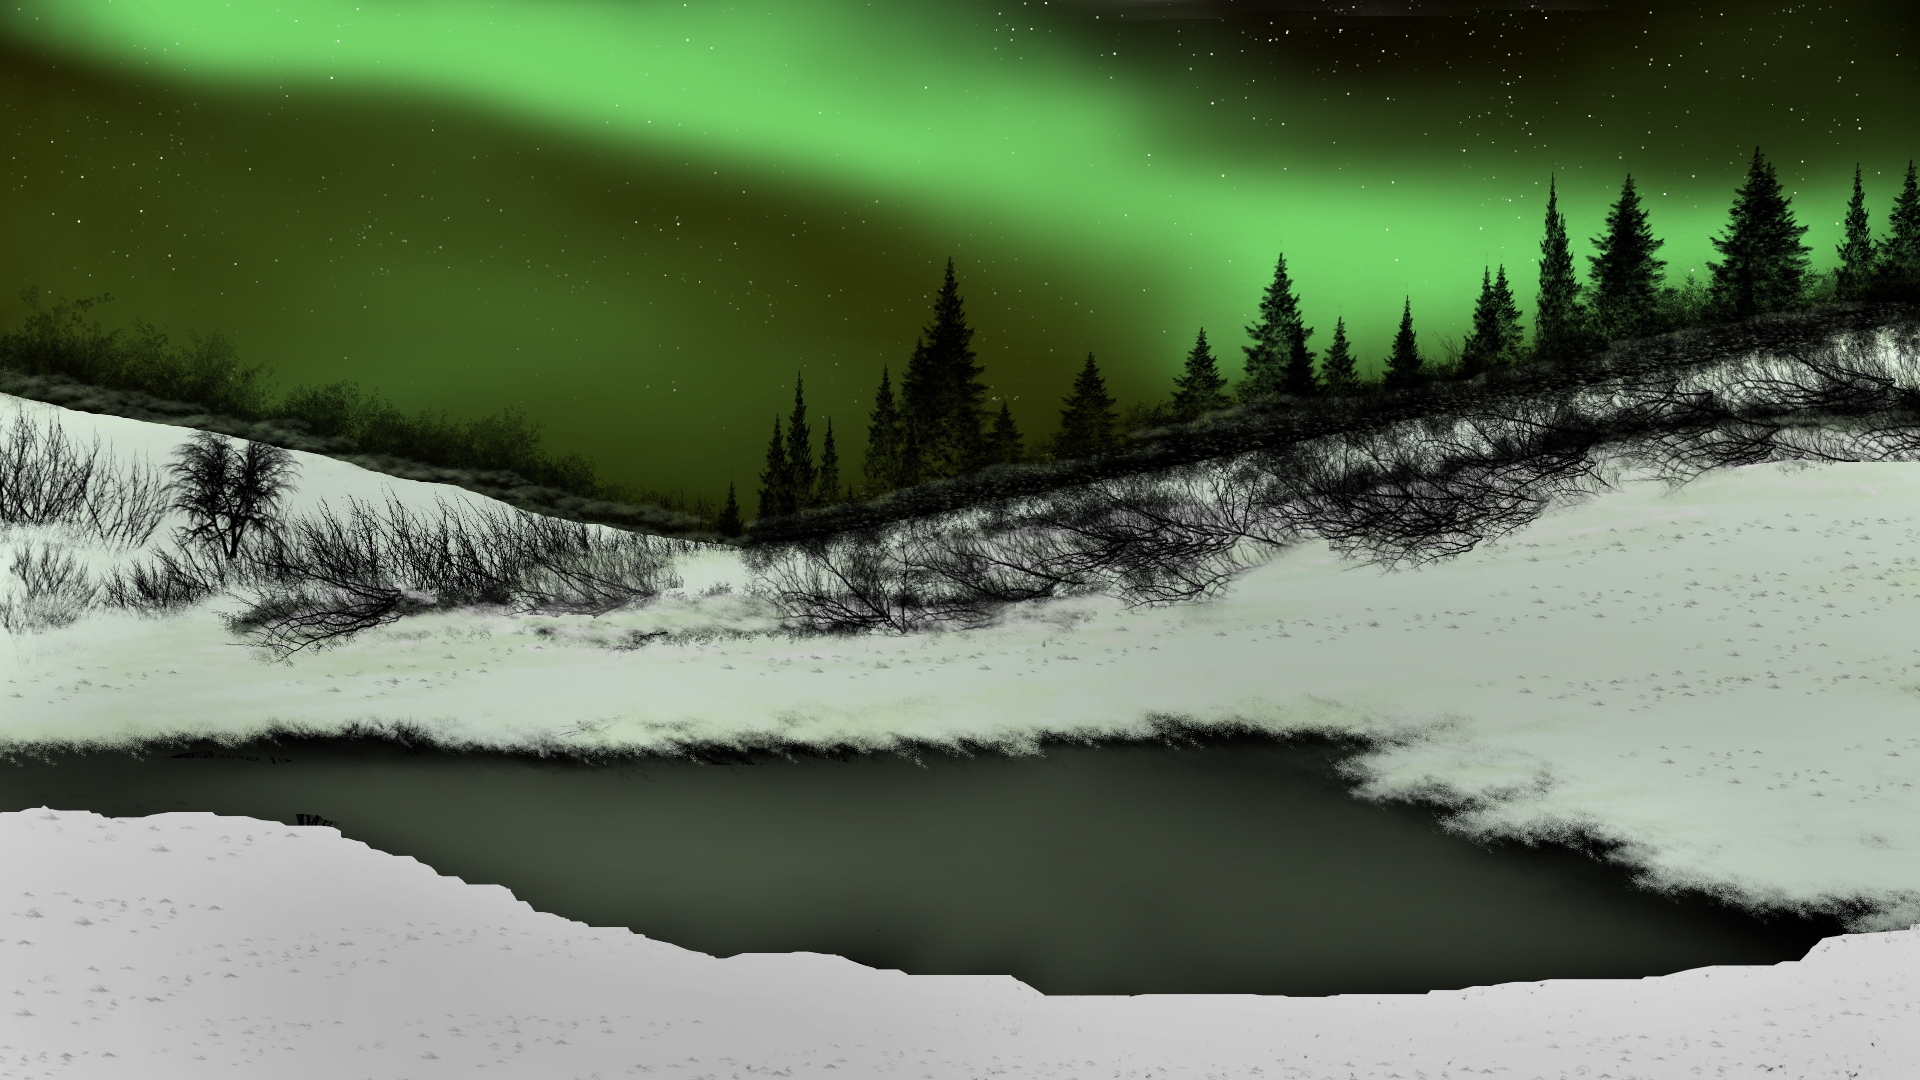 Digital Painting Digital Art Winter Nature Landscape Aurorae Trees Snow 1920x1080